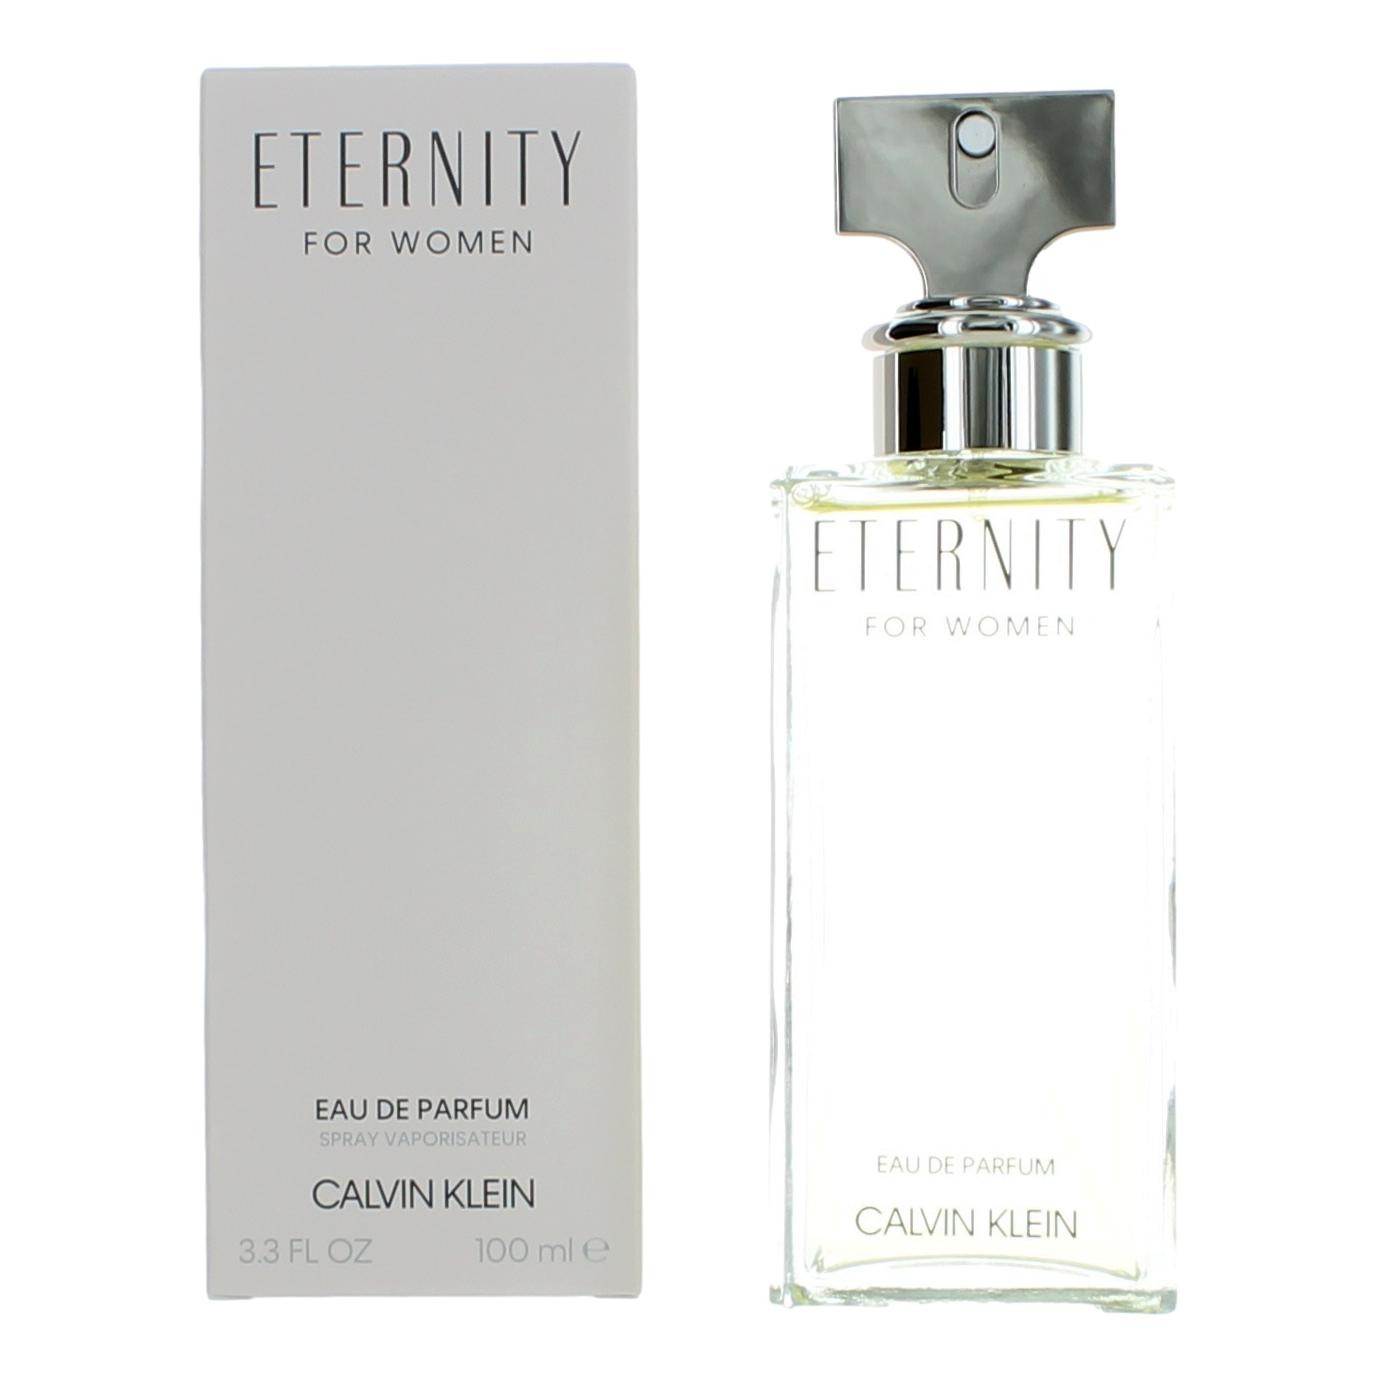 Eternity by Calvin Klein 3.3 oz Eau De Parfum Spray for Women